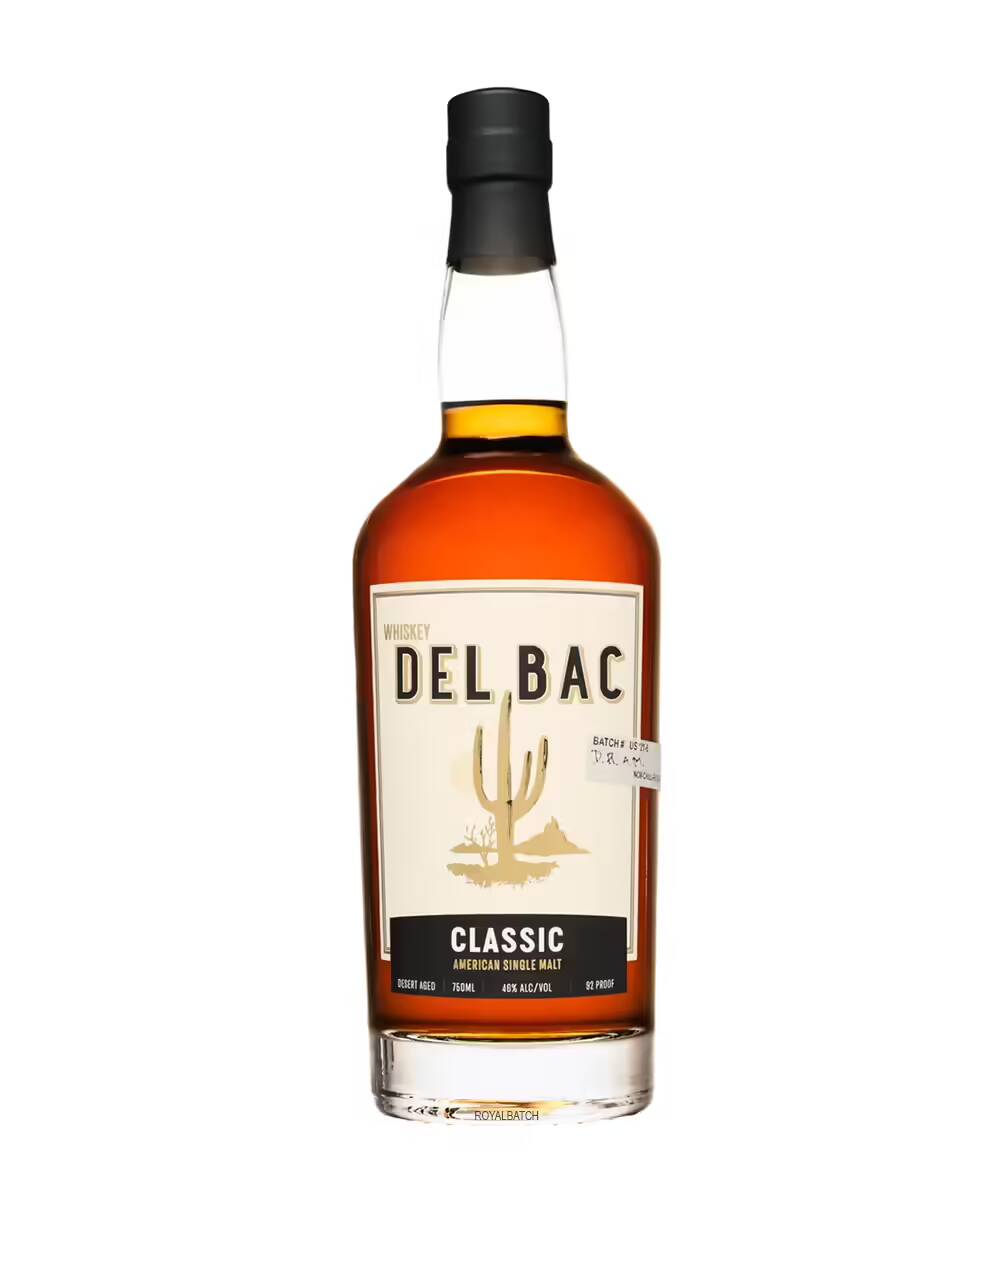 Del Bac Classic American Single Malt Whiskey